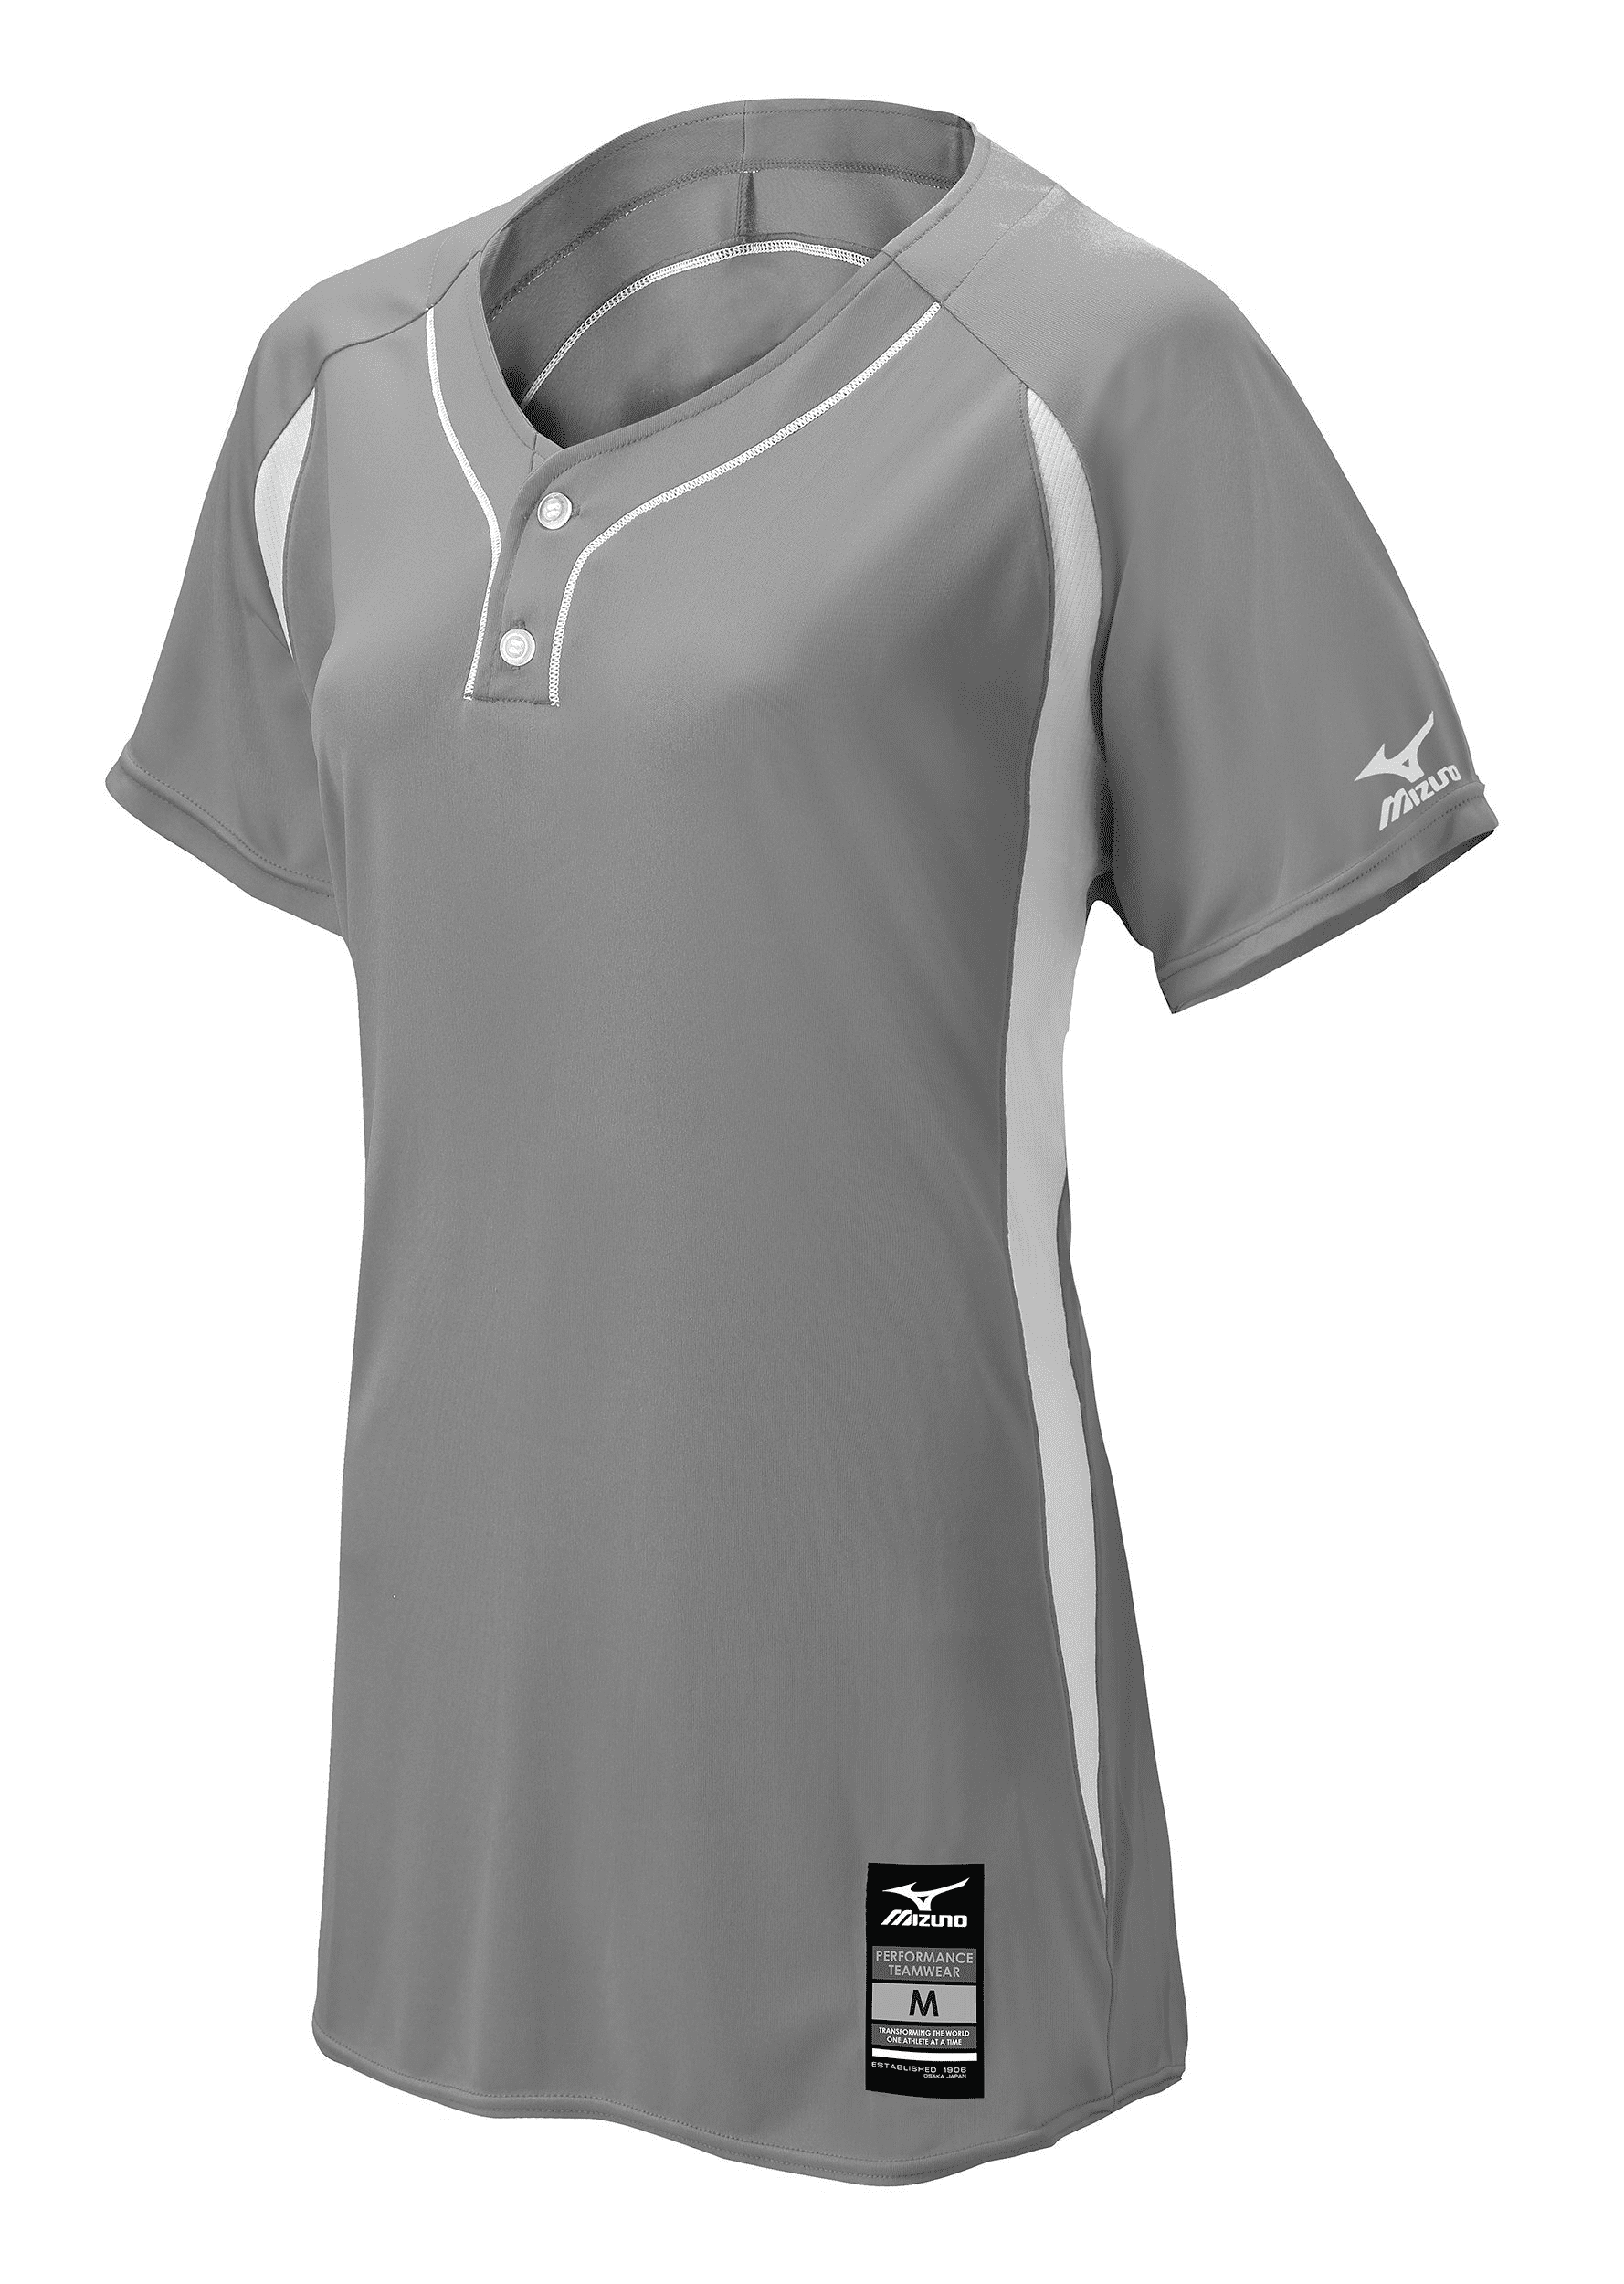 Mizuno Women's 2-Button Game Jersey, Size Extra Large, (9100) - Walmart.com